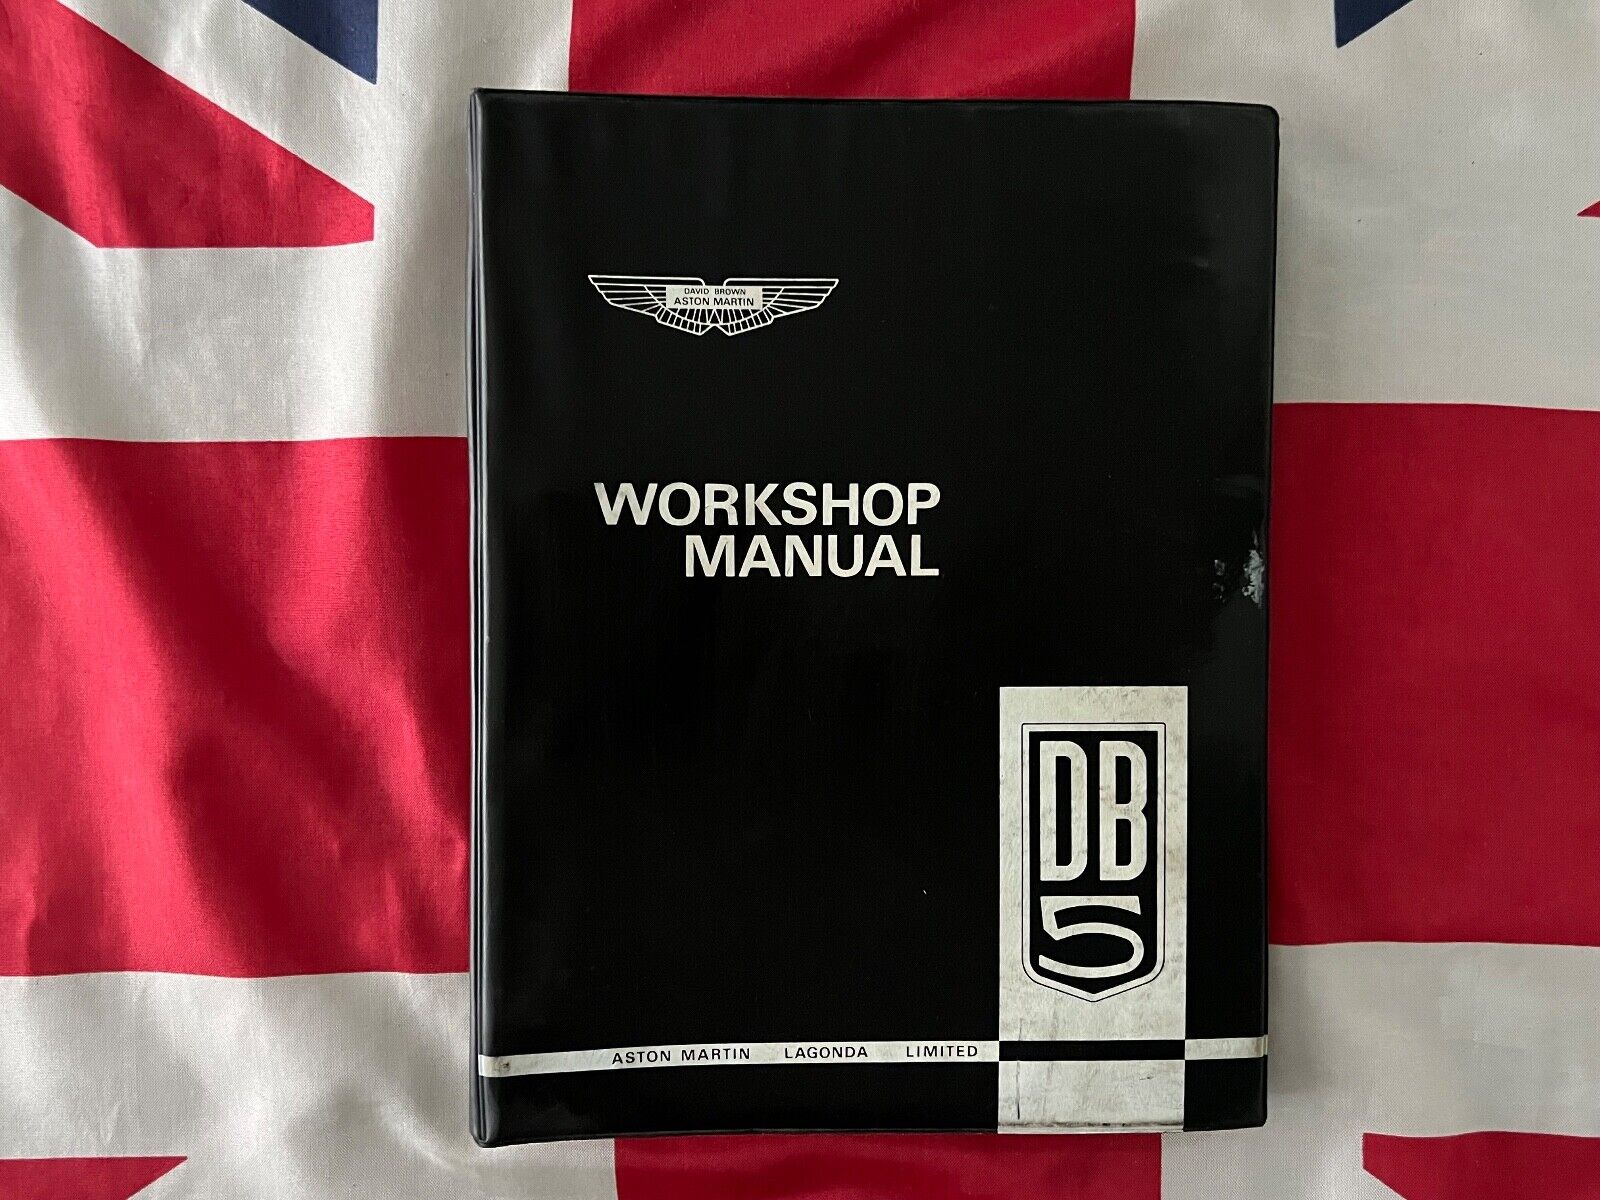 Original Aston Martin DB5 Workshop Manual